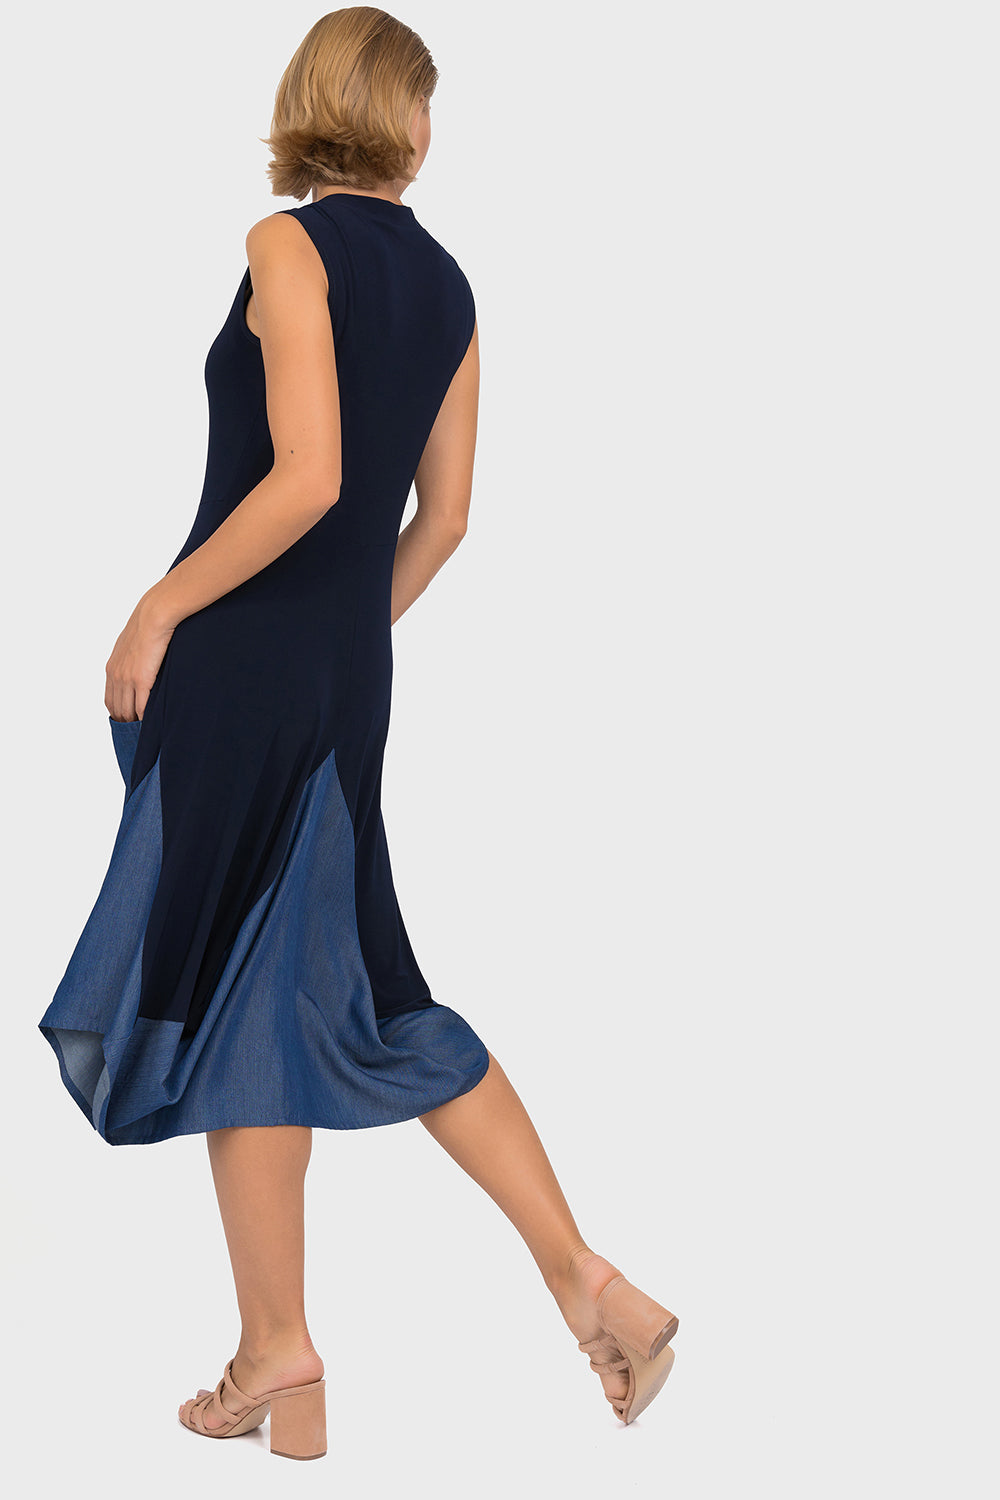 Joseph Ribkoff Midnight Blue-Denim Dress Style 192451